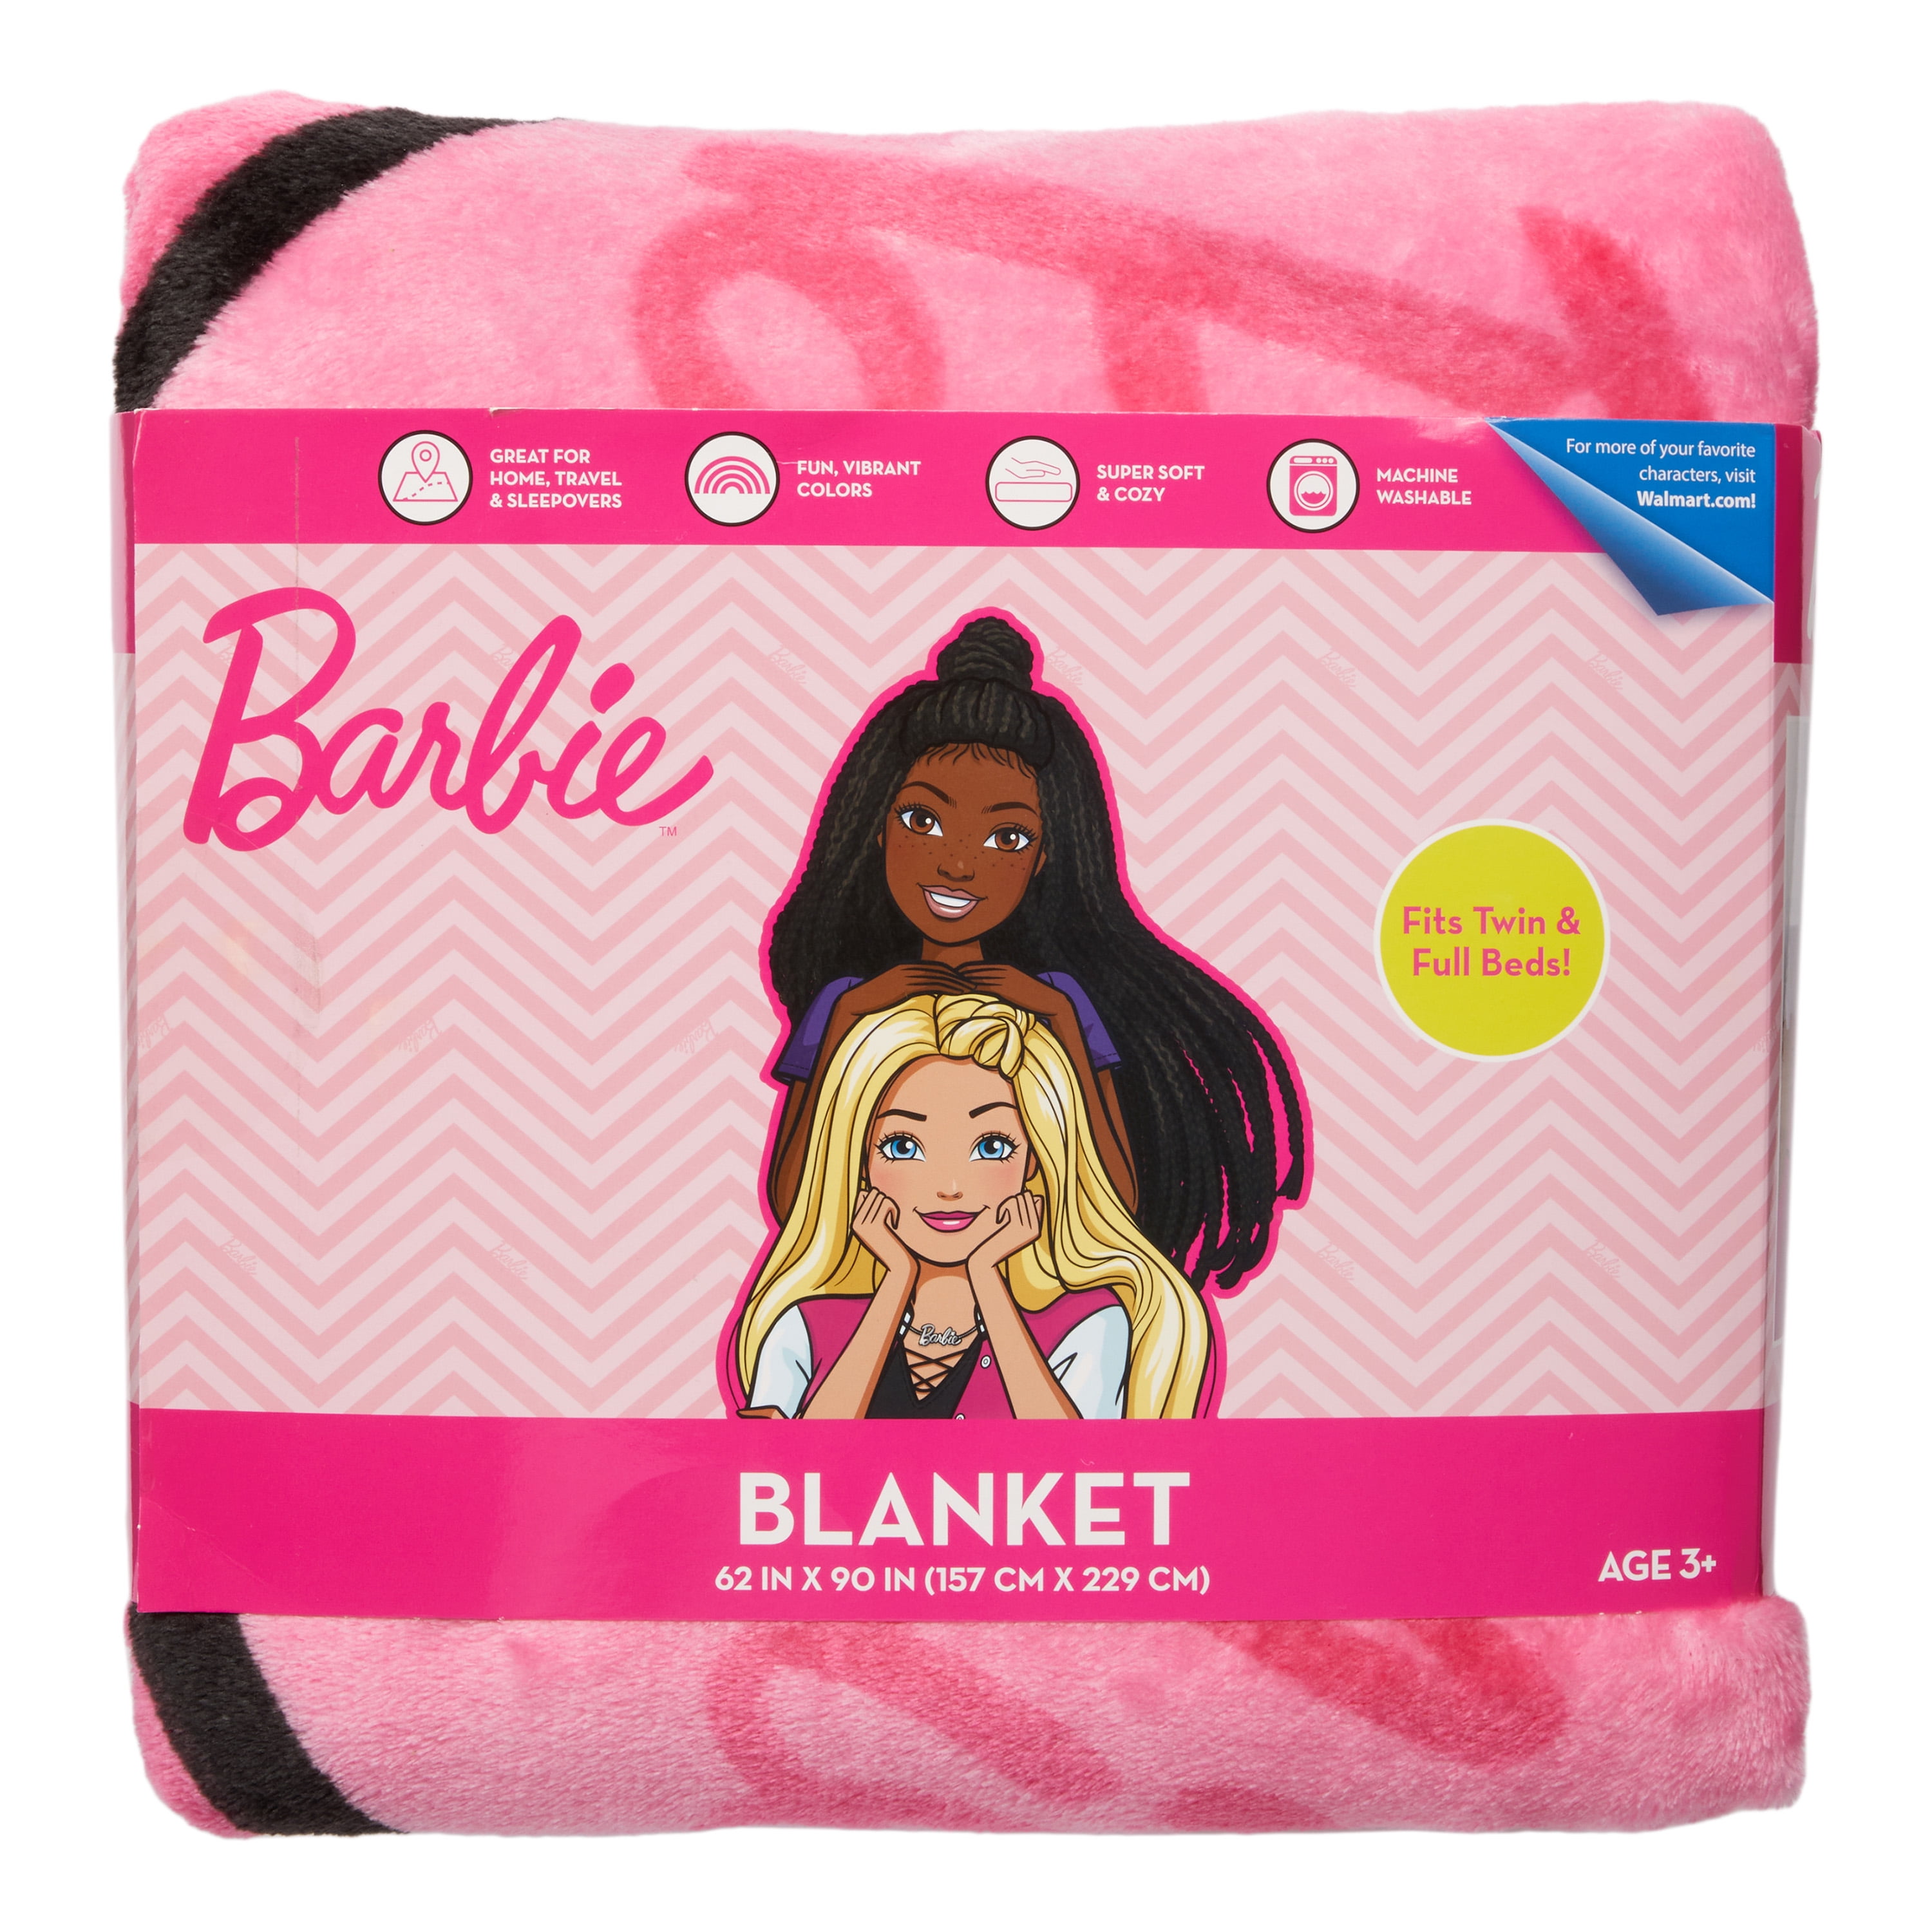 Barbie Kids Plush Blanket, Twin/Full Size, 62x90, Pink, Mattel 